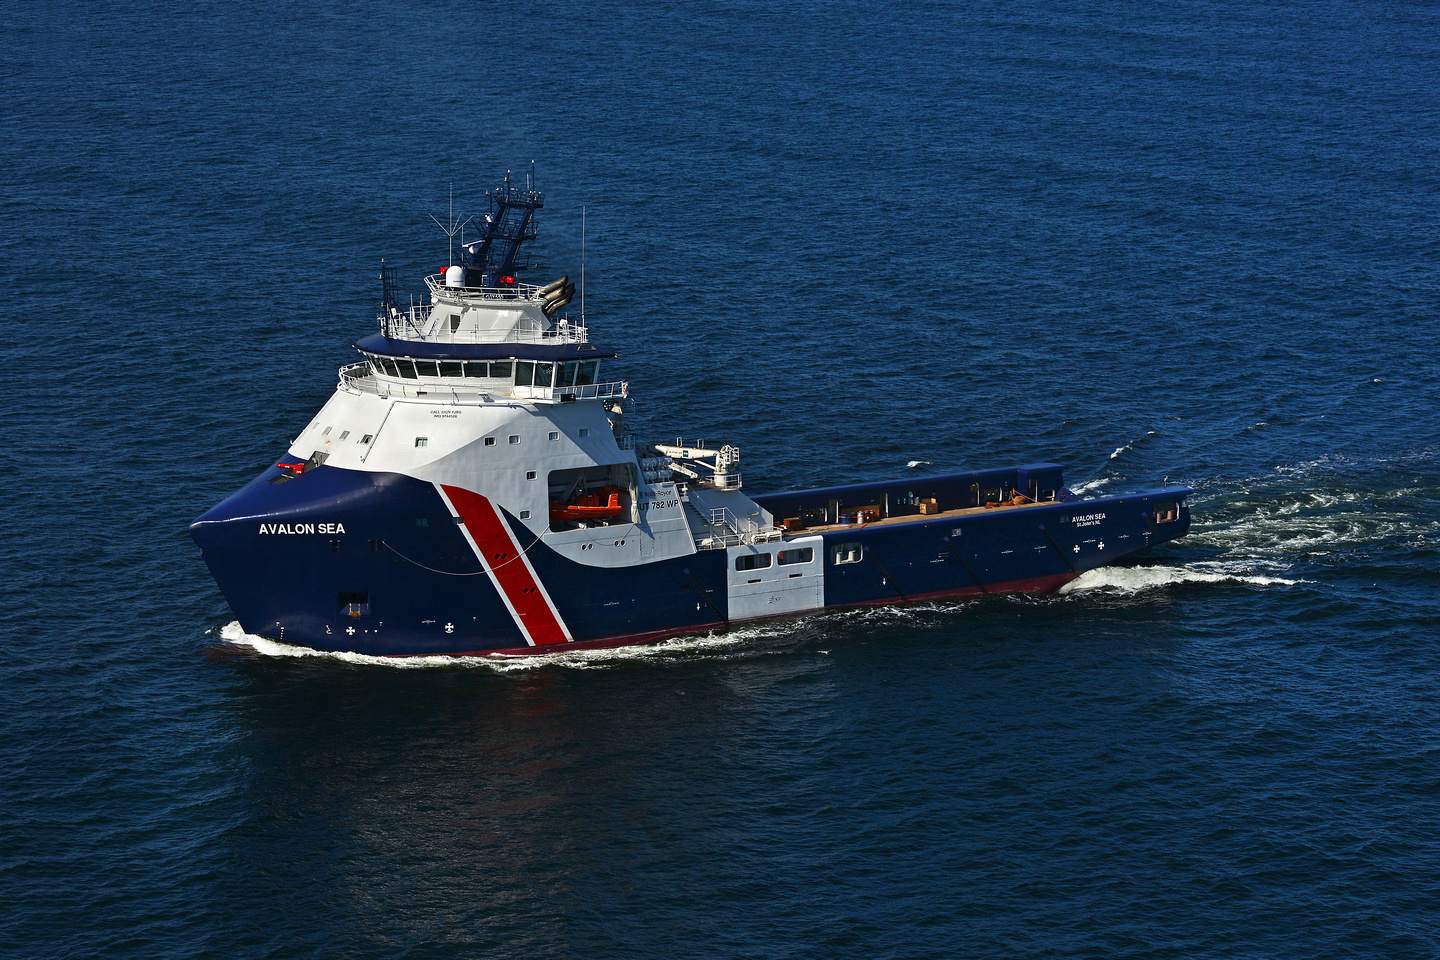 Avalon Sea support vessel for Hebron